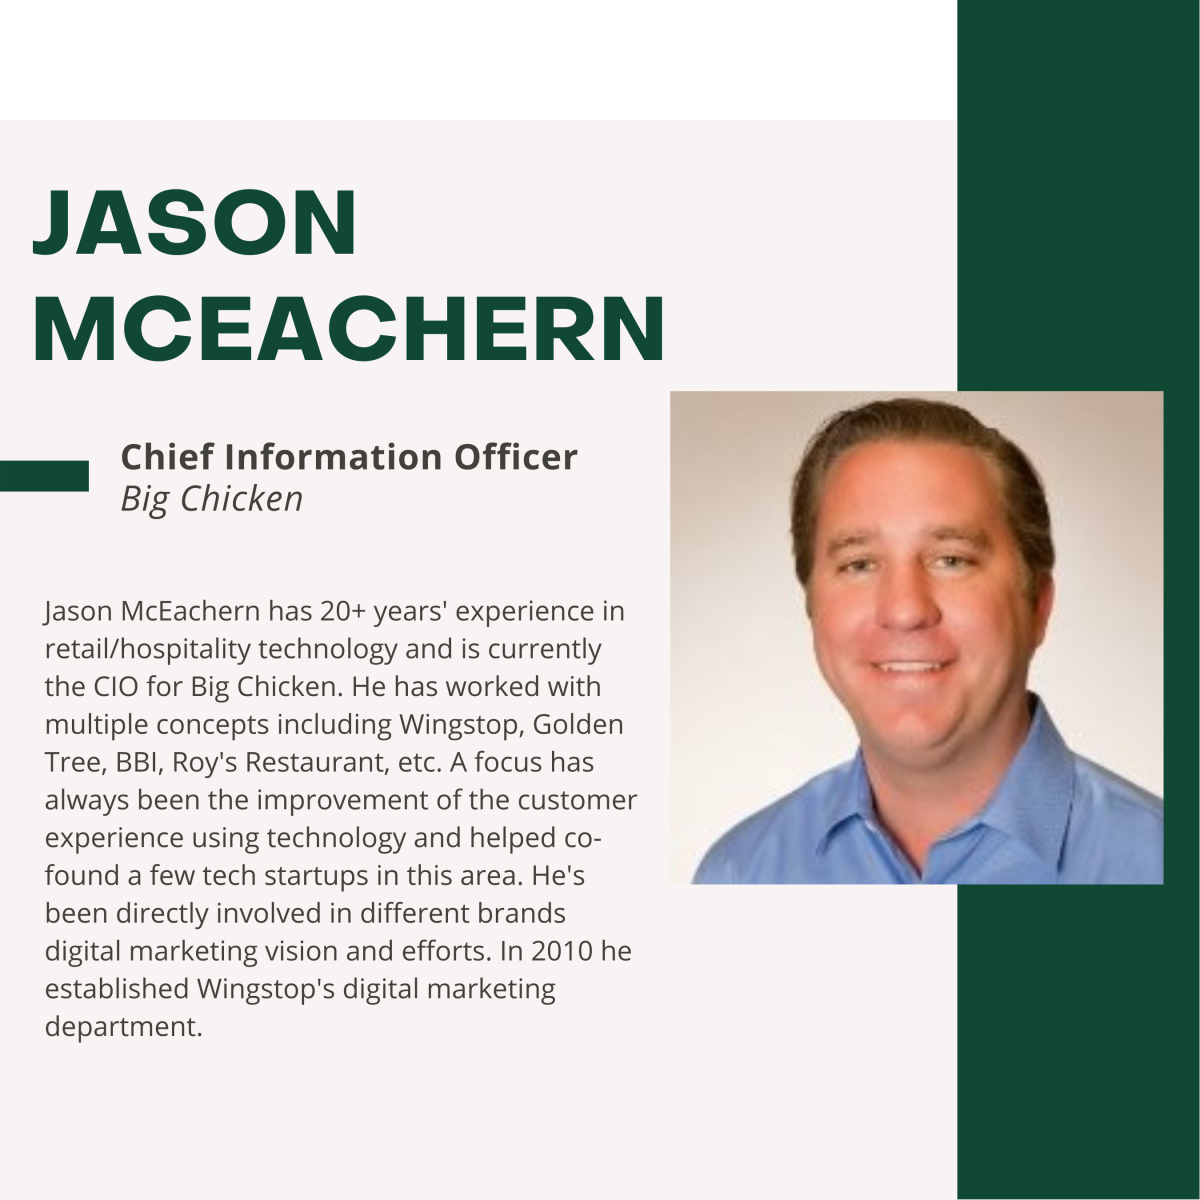 Jason McEachern